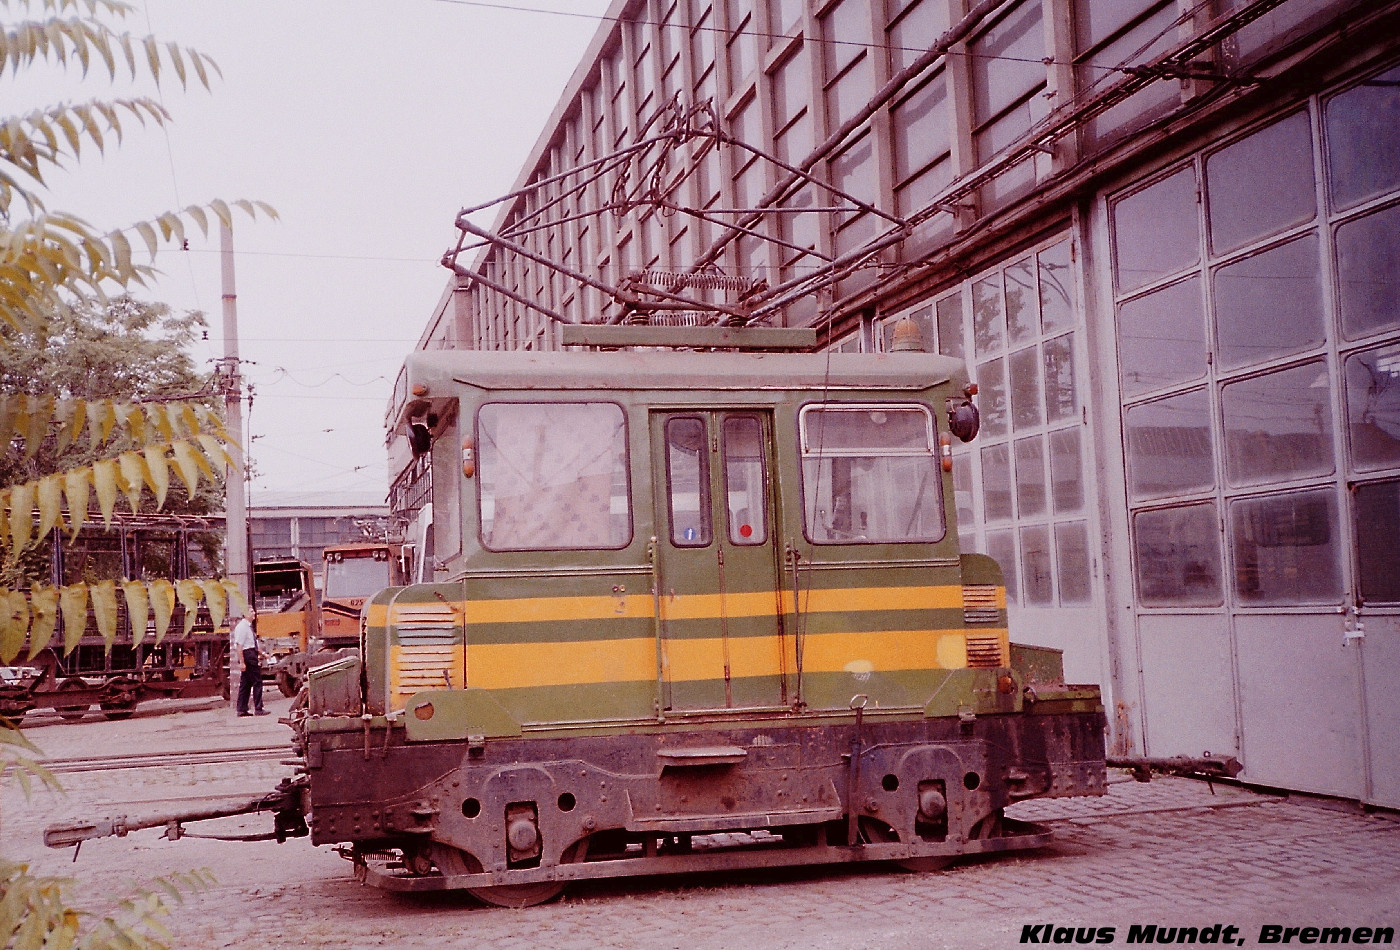 Steeple-cab locomotive #998A